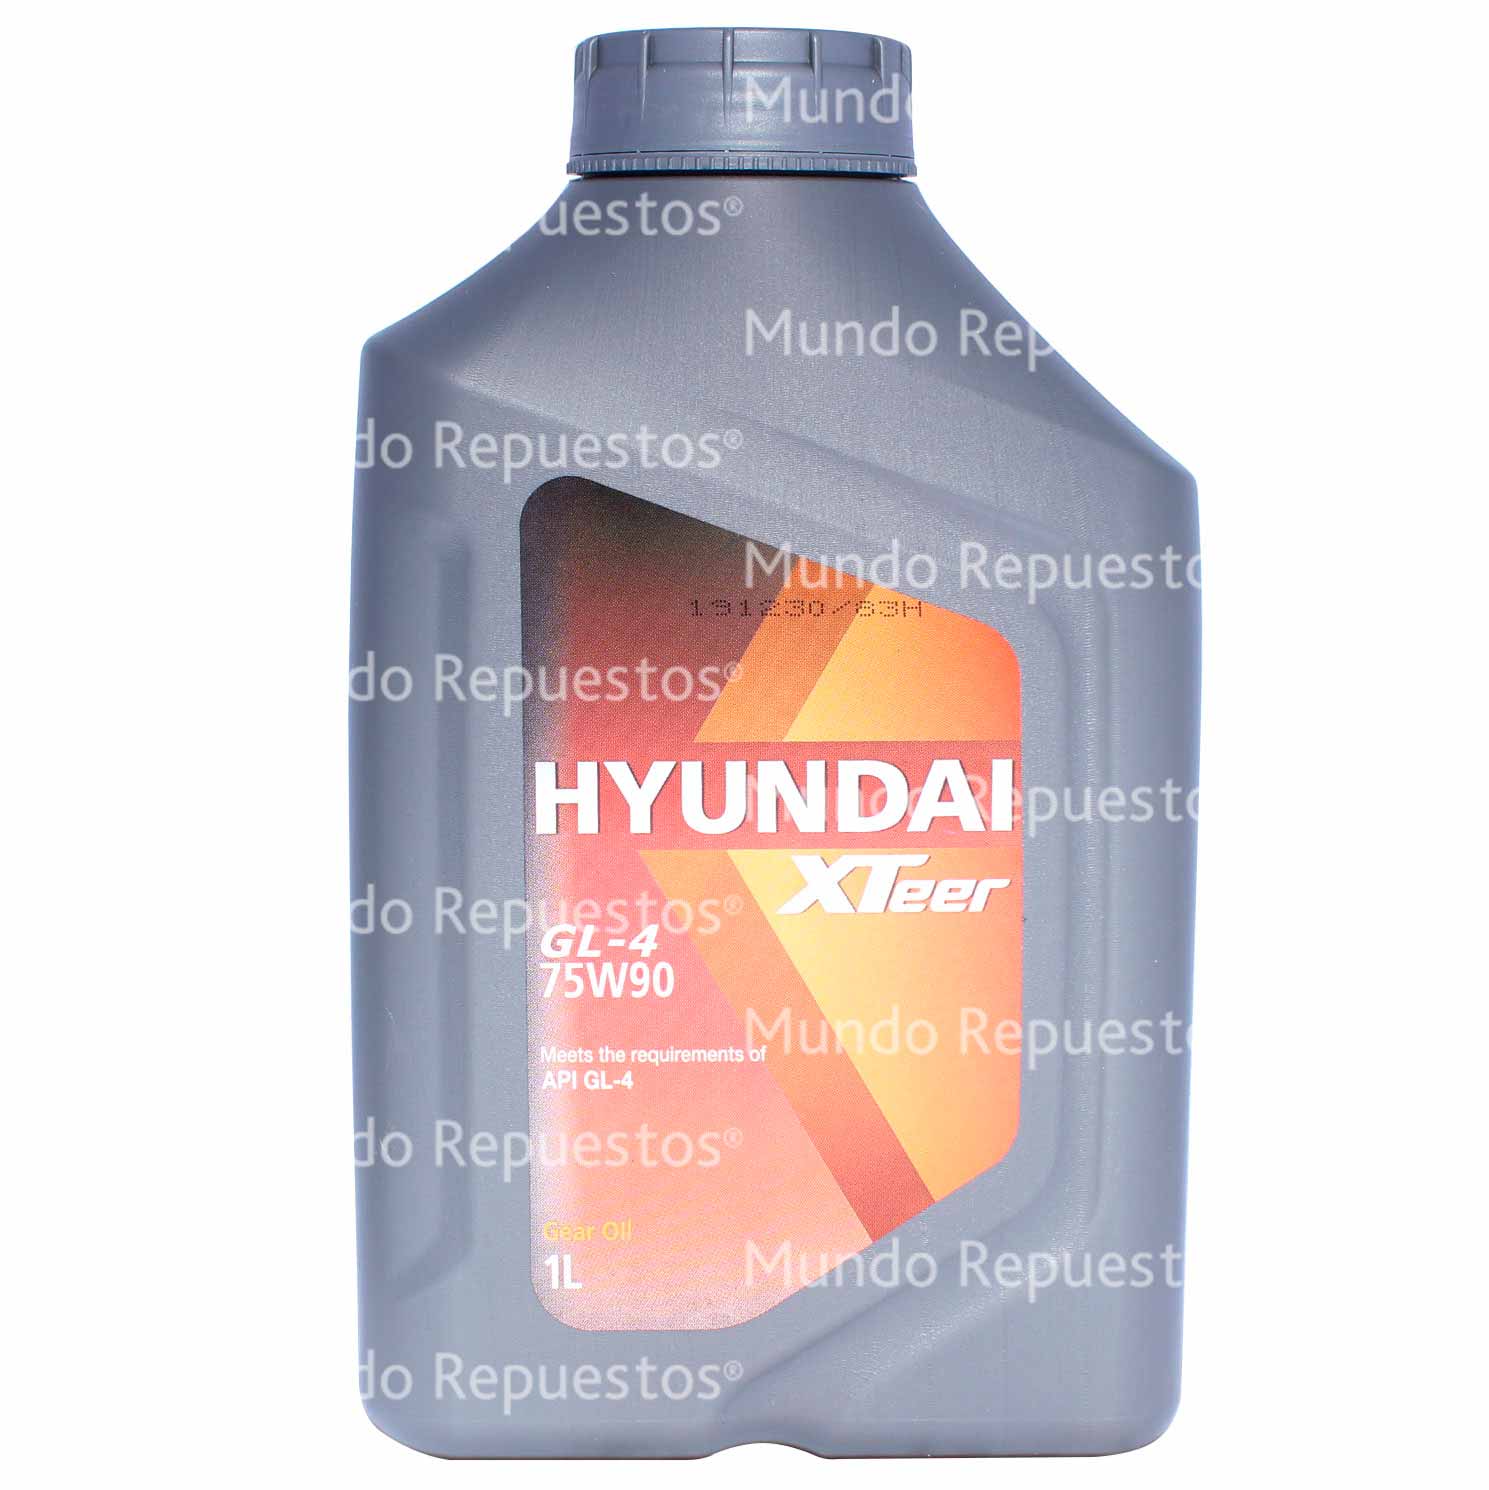 Aceite Hyundai Xteer  Mundo Repuestos Chile